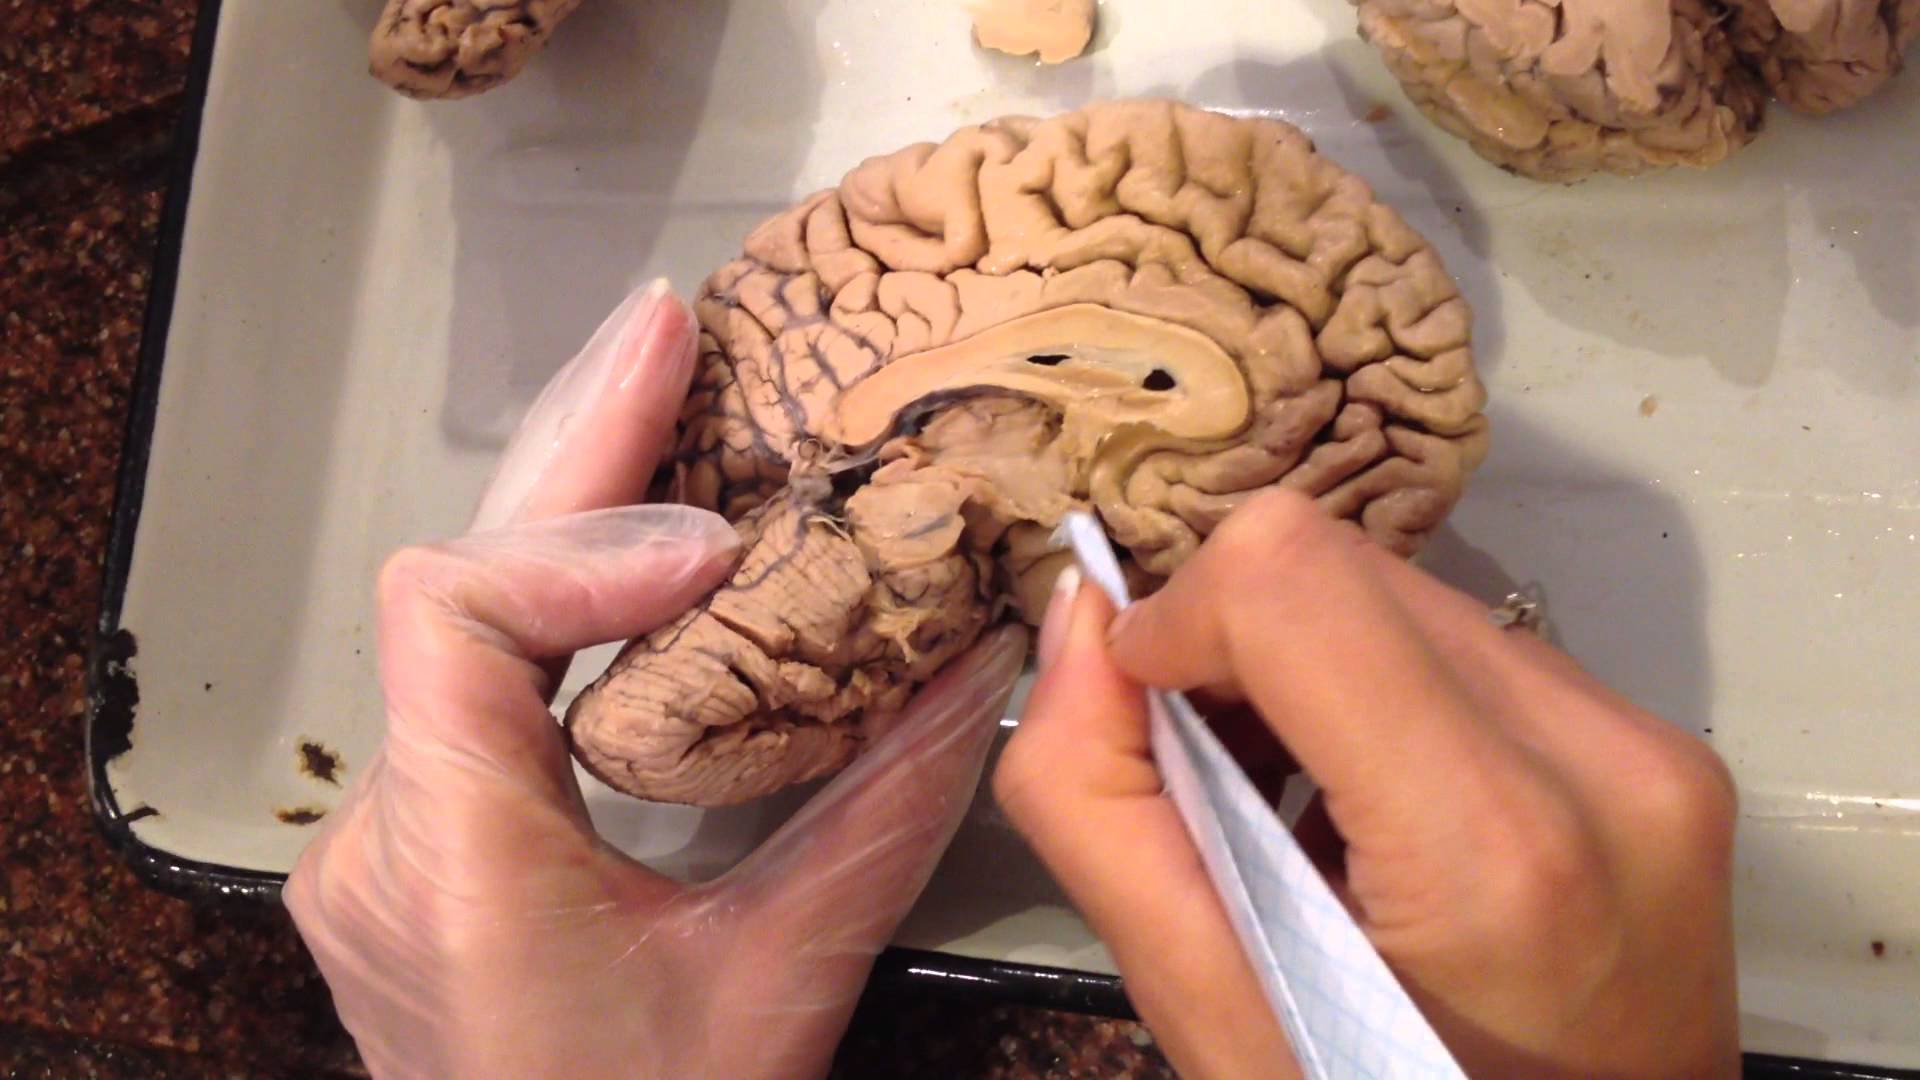 Едят ли мозг человека. Натовщий мозг человека. Настоящий человеческий мозг.